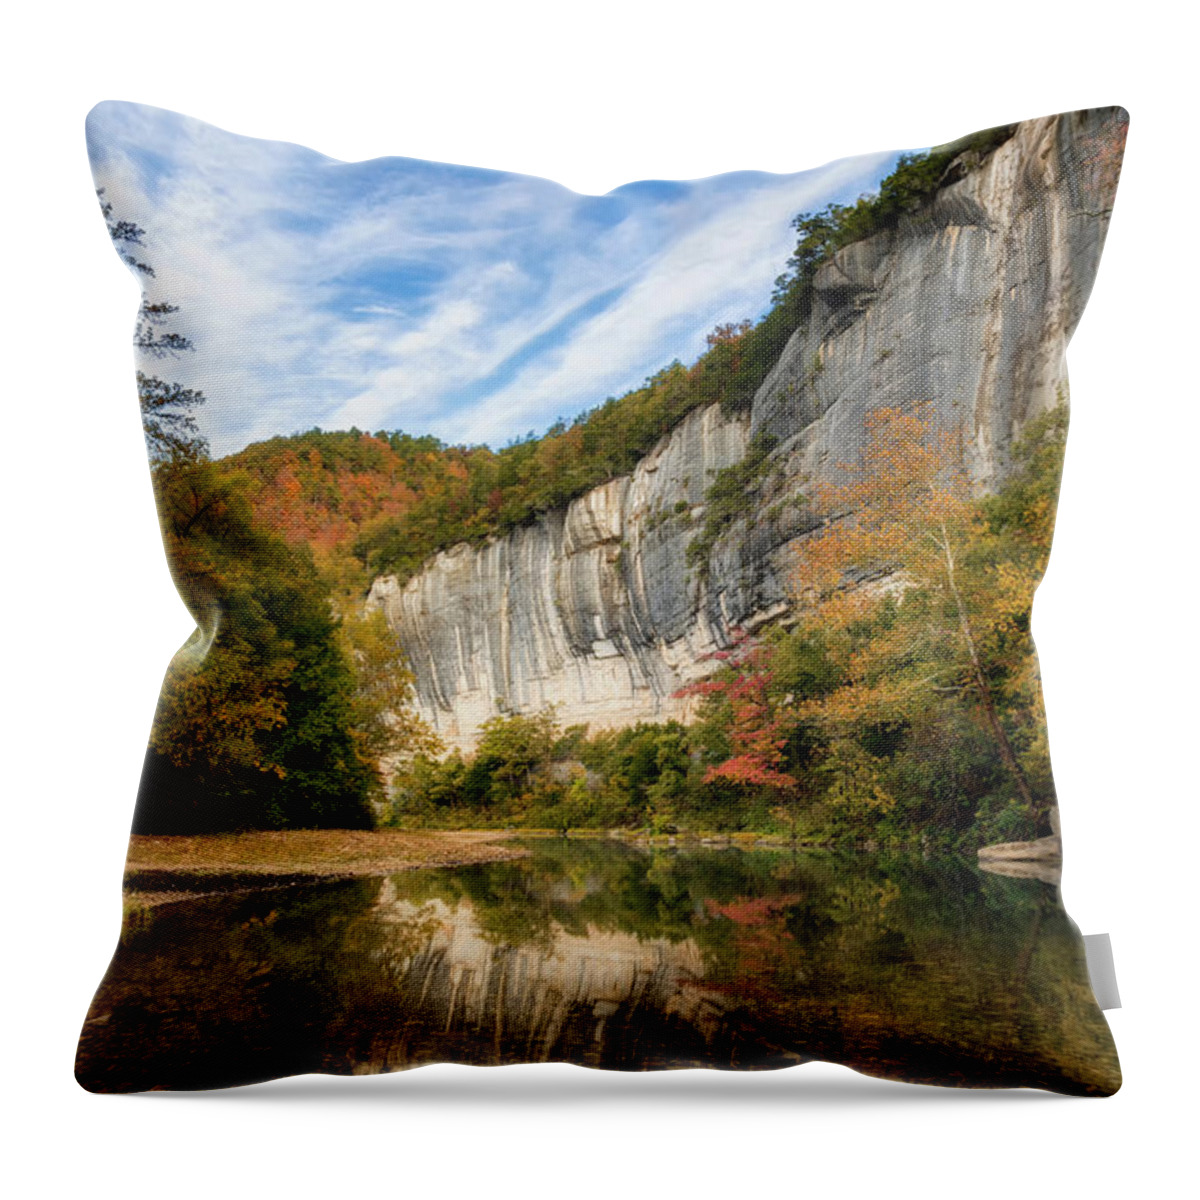 Arkansas Throw Pillow featuring the photograph Bluff by James Barber